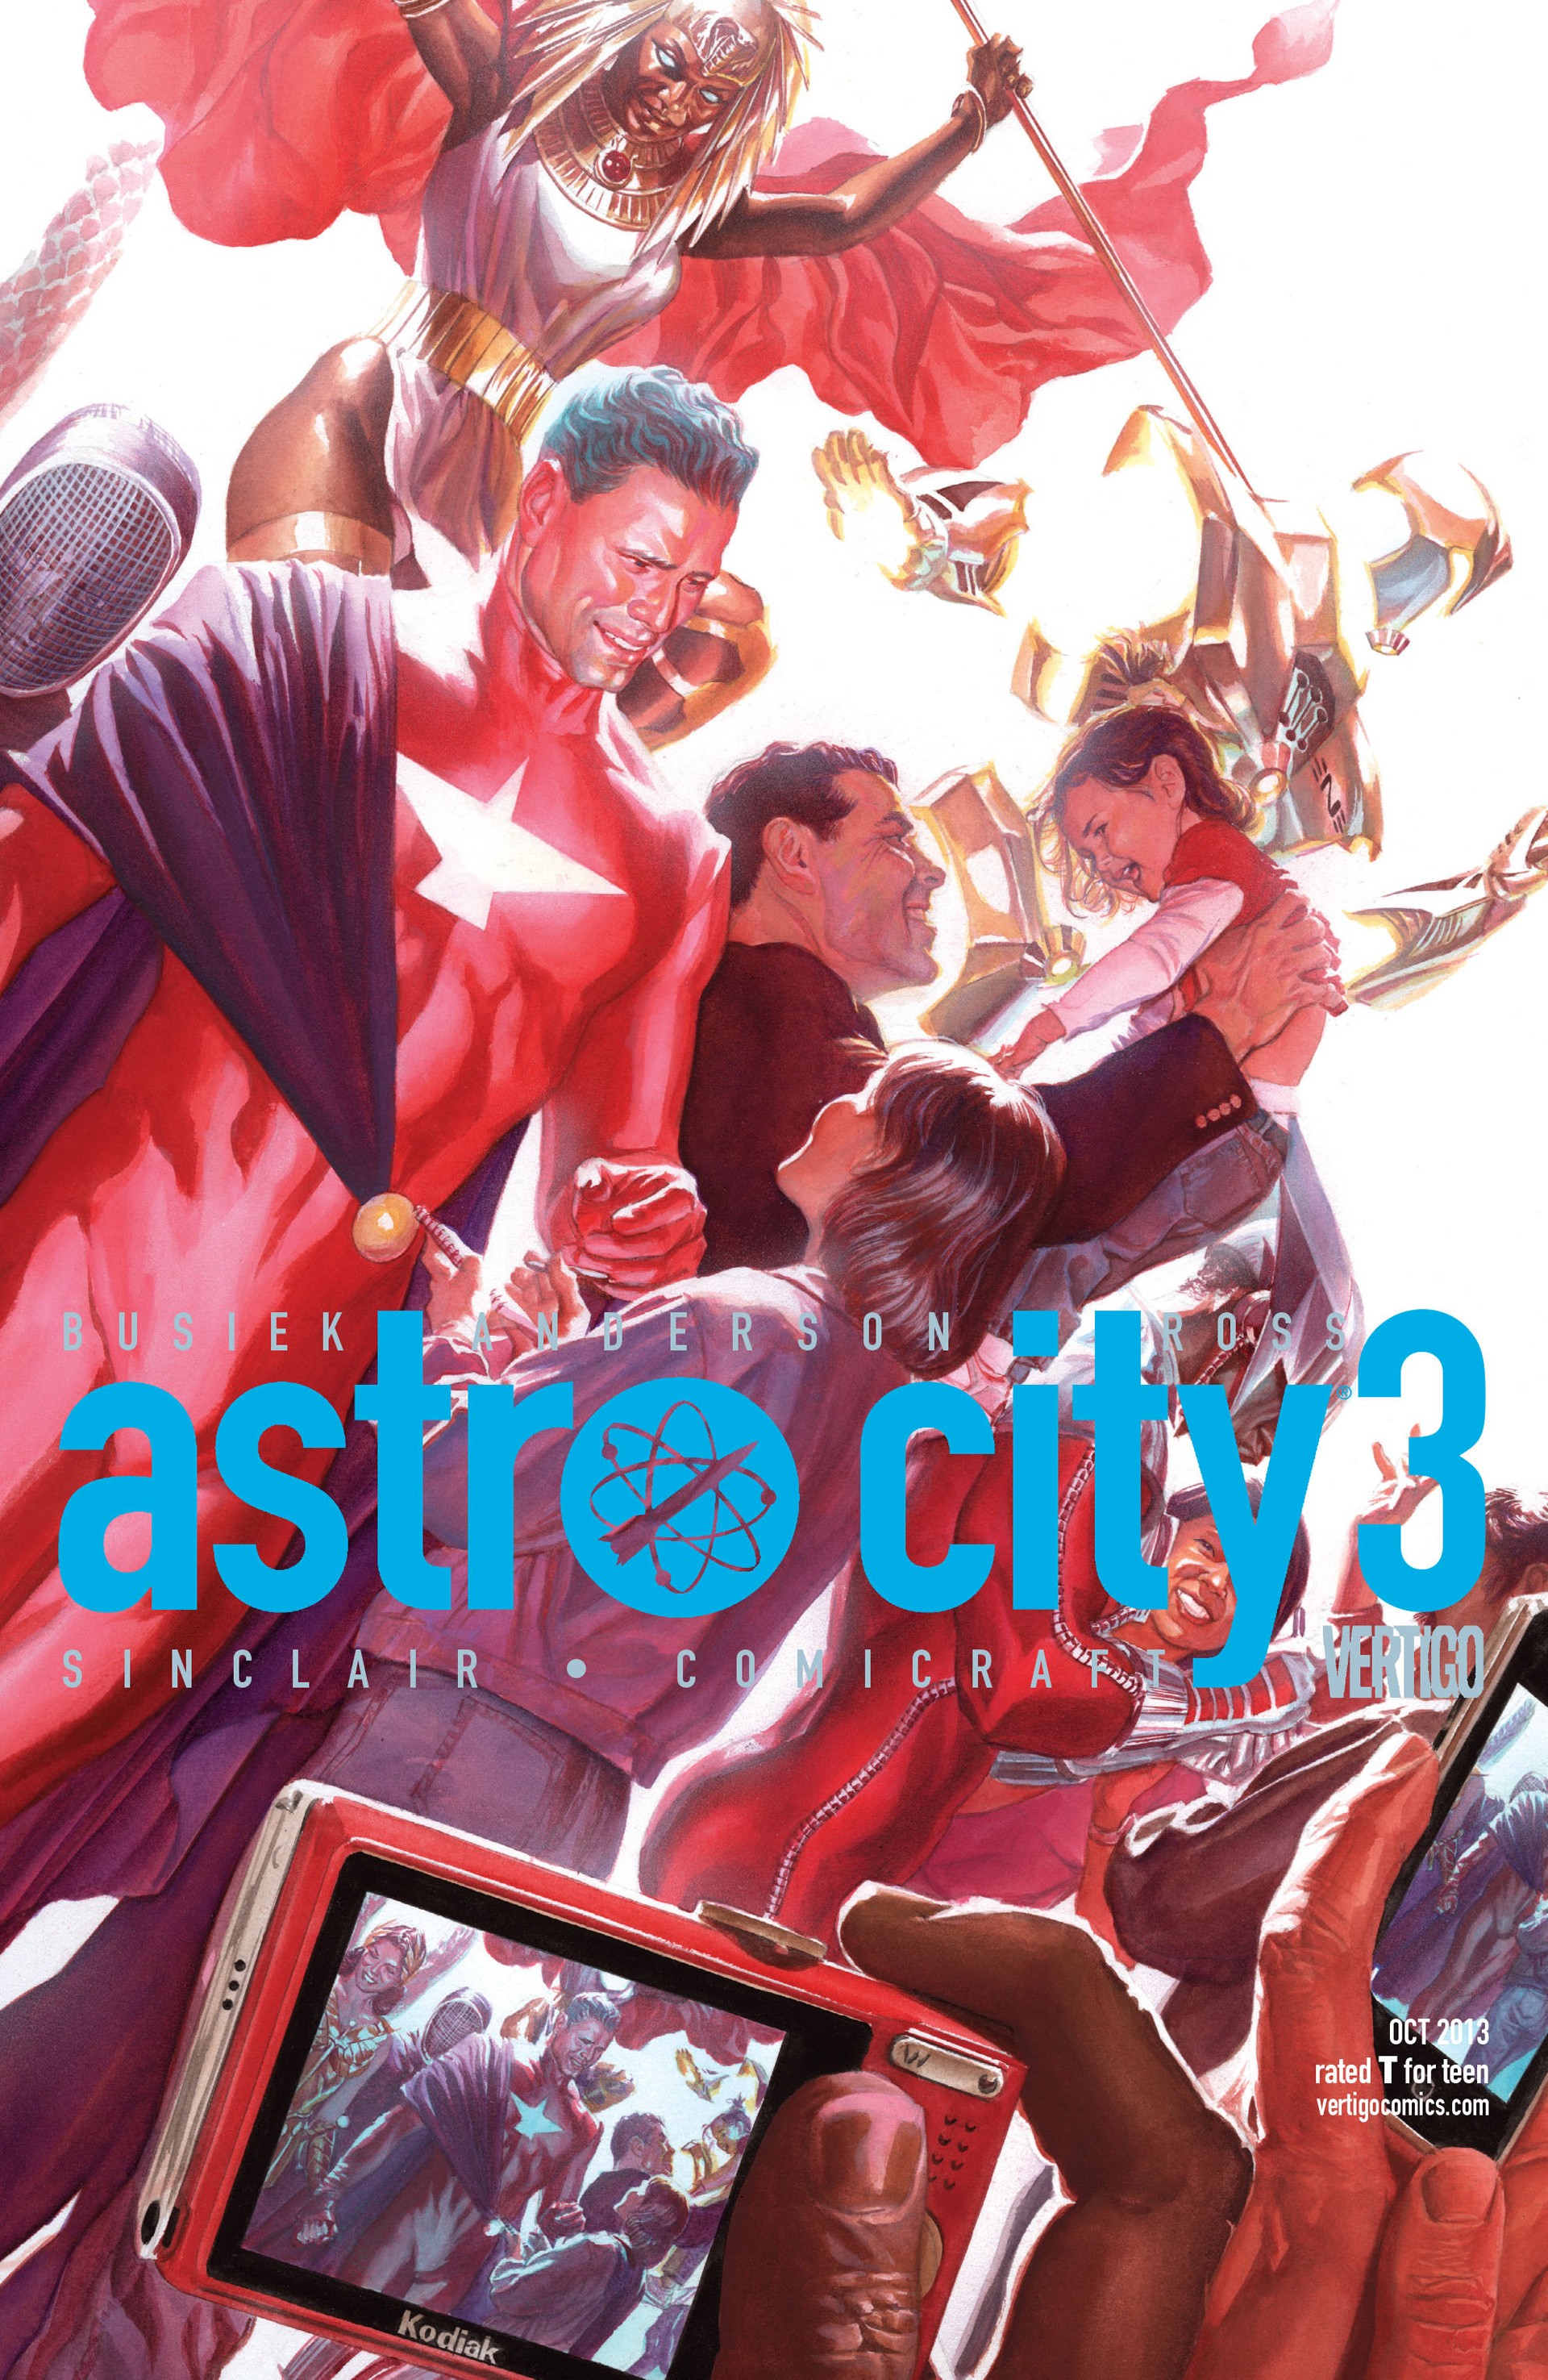 Astro City Vol. 3 #3